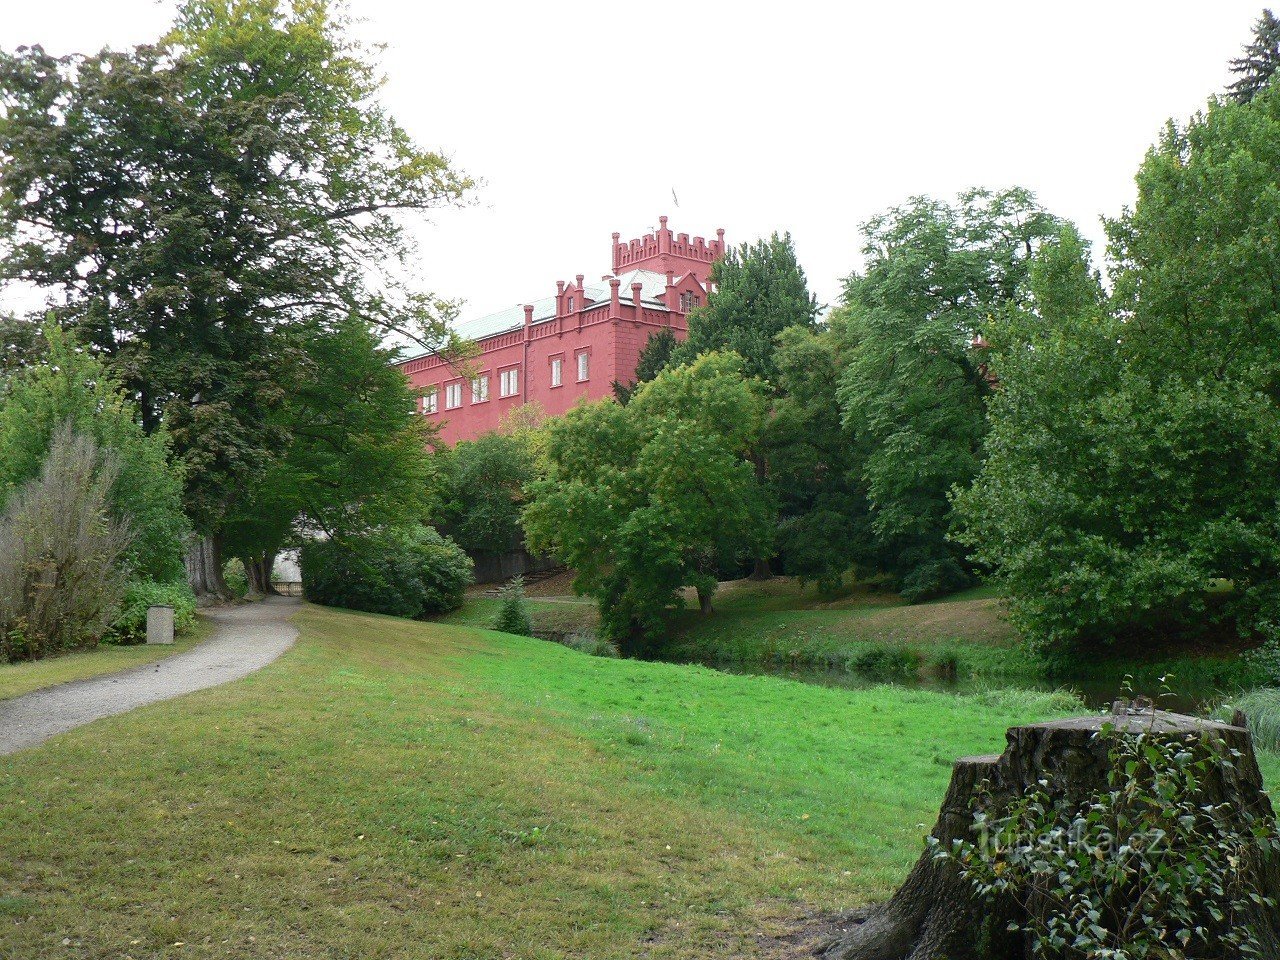 Klášterec nad Ohří, view of the castle from the park